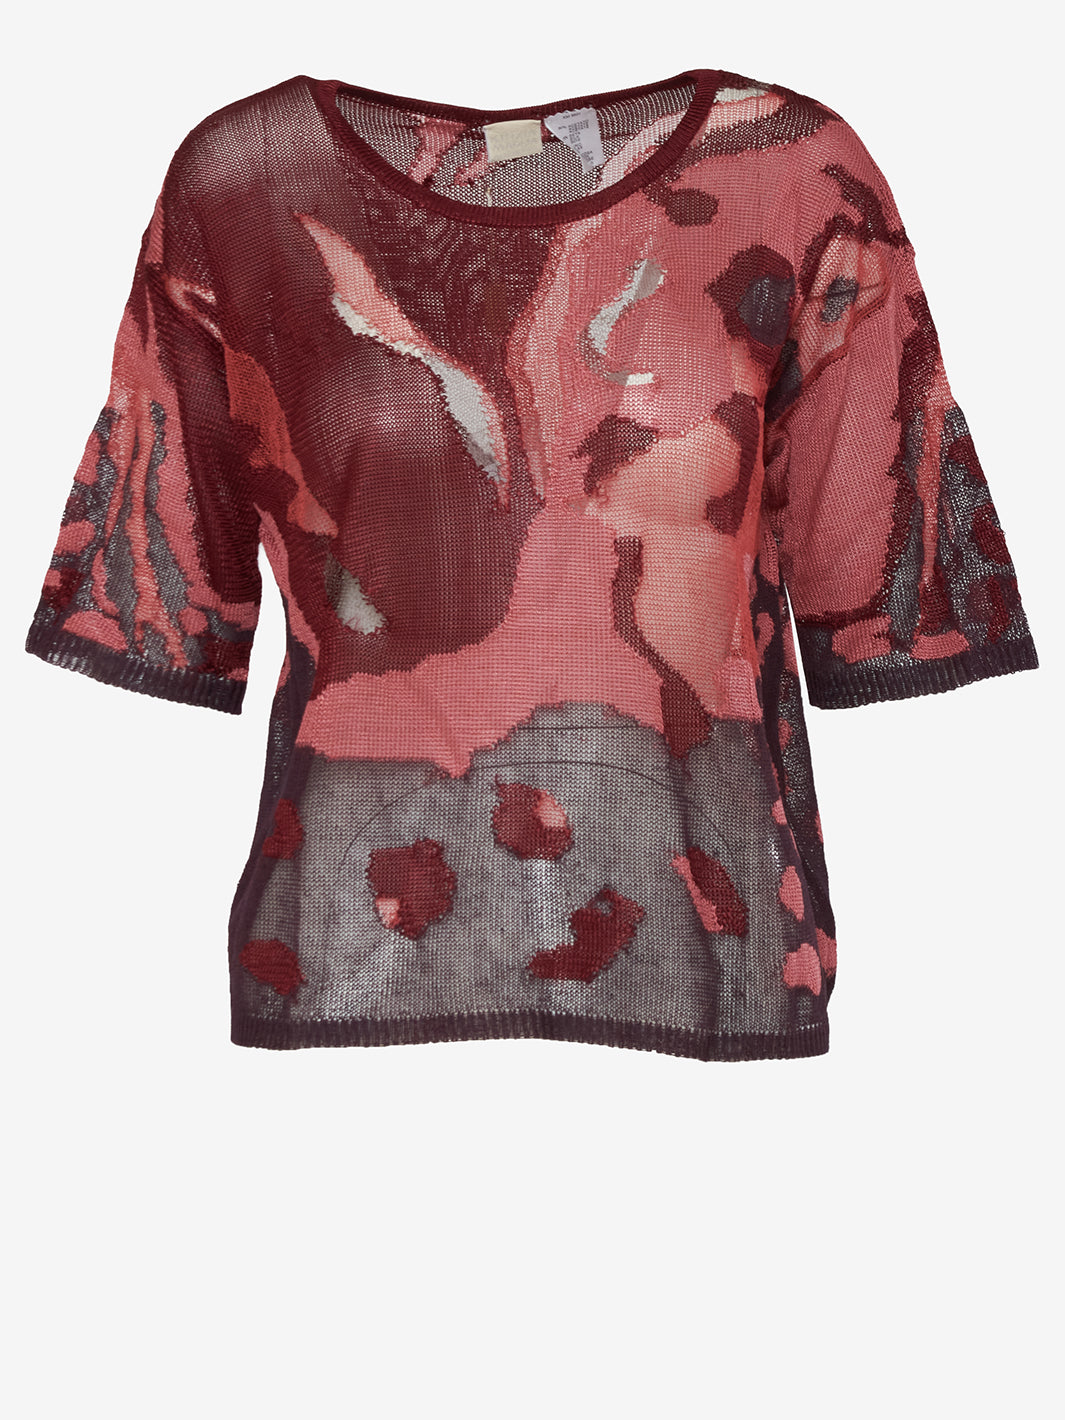 Krizia burgundy patterned T-shirt